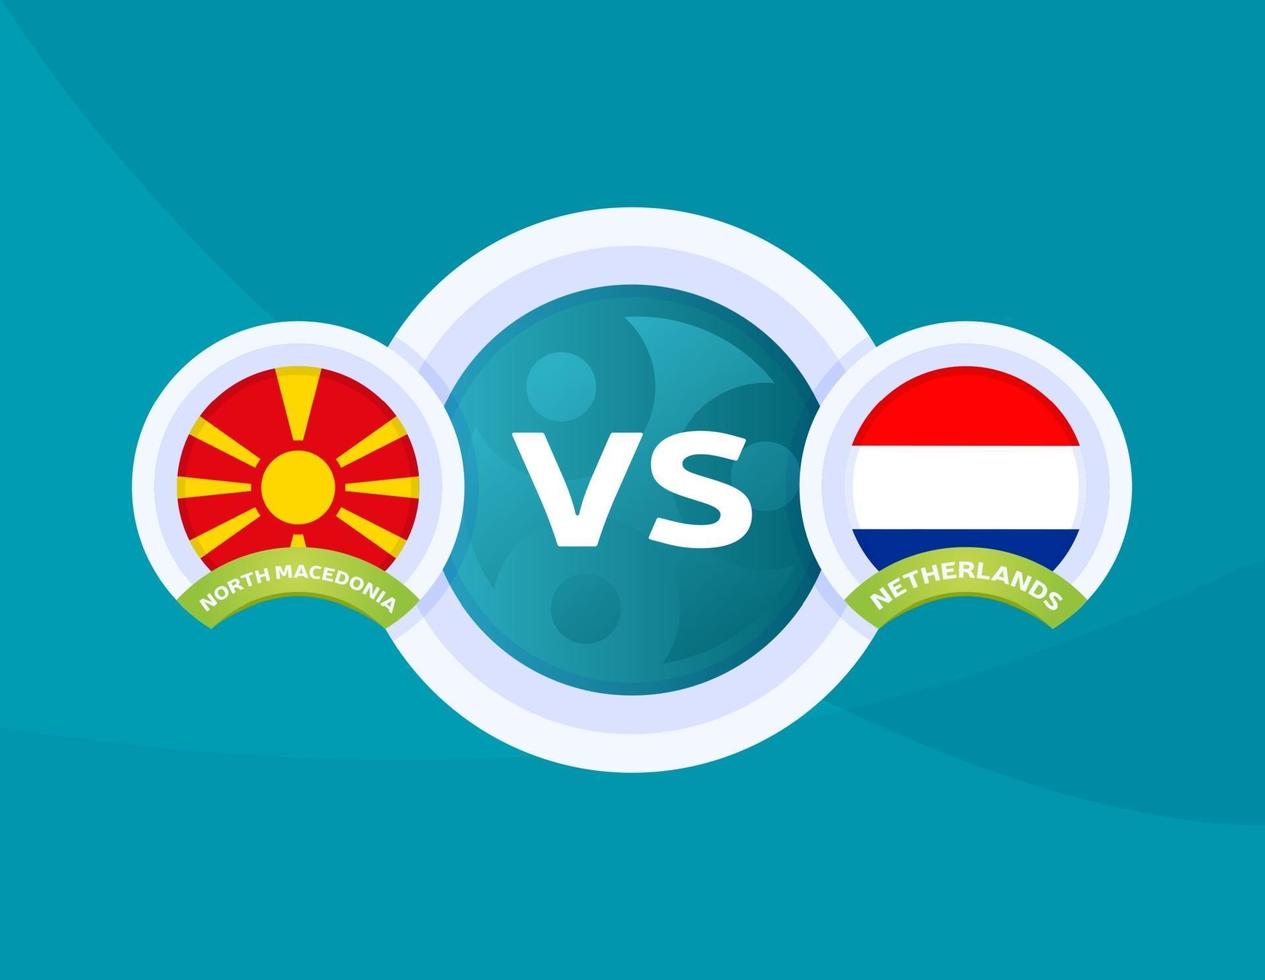 north Macedonia vs Netherlands football vector